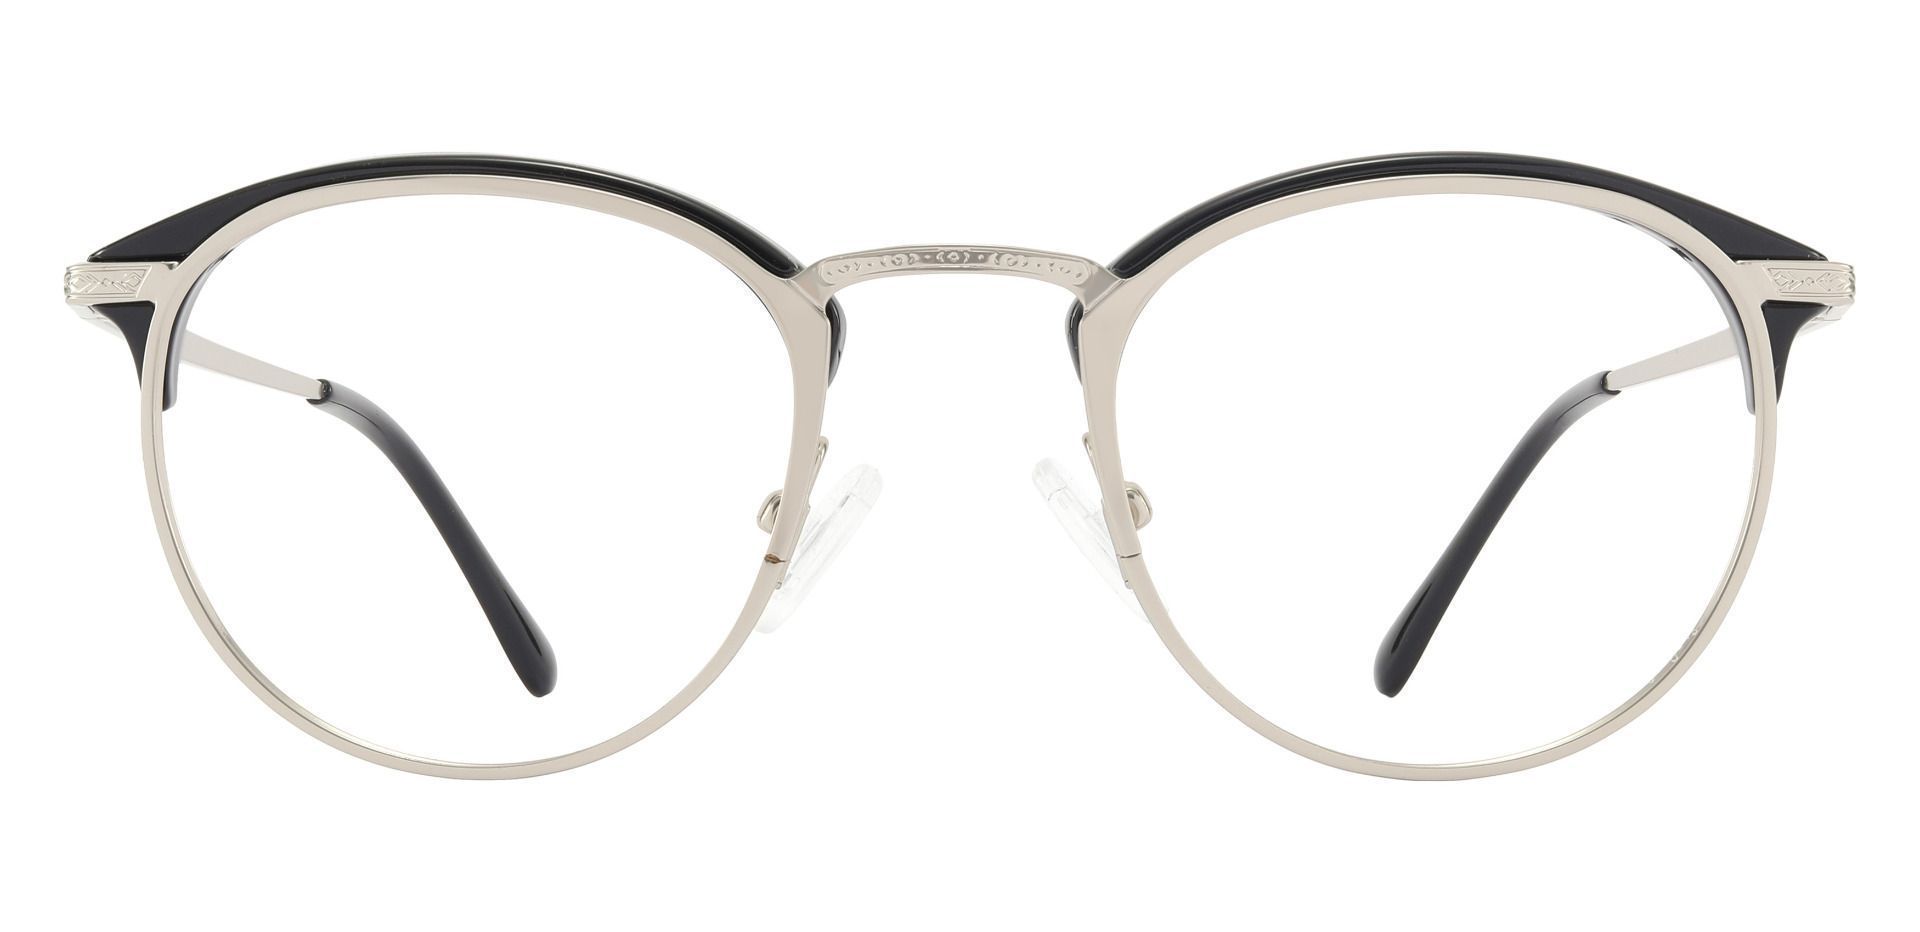 Shultz Browline Progressive Glasses - Silver